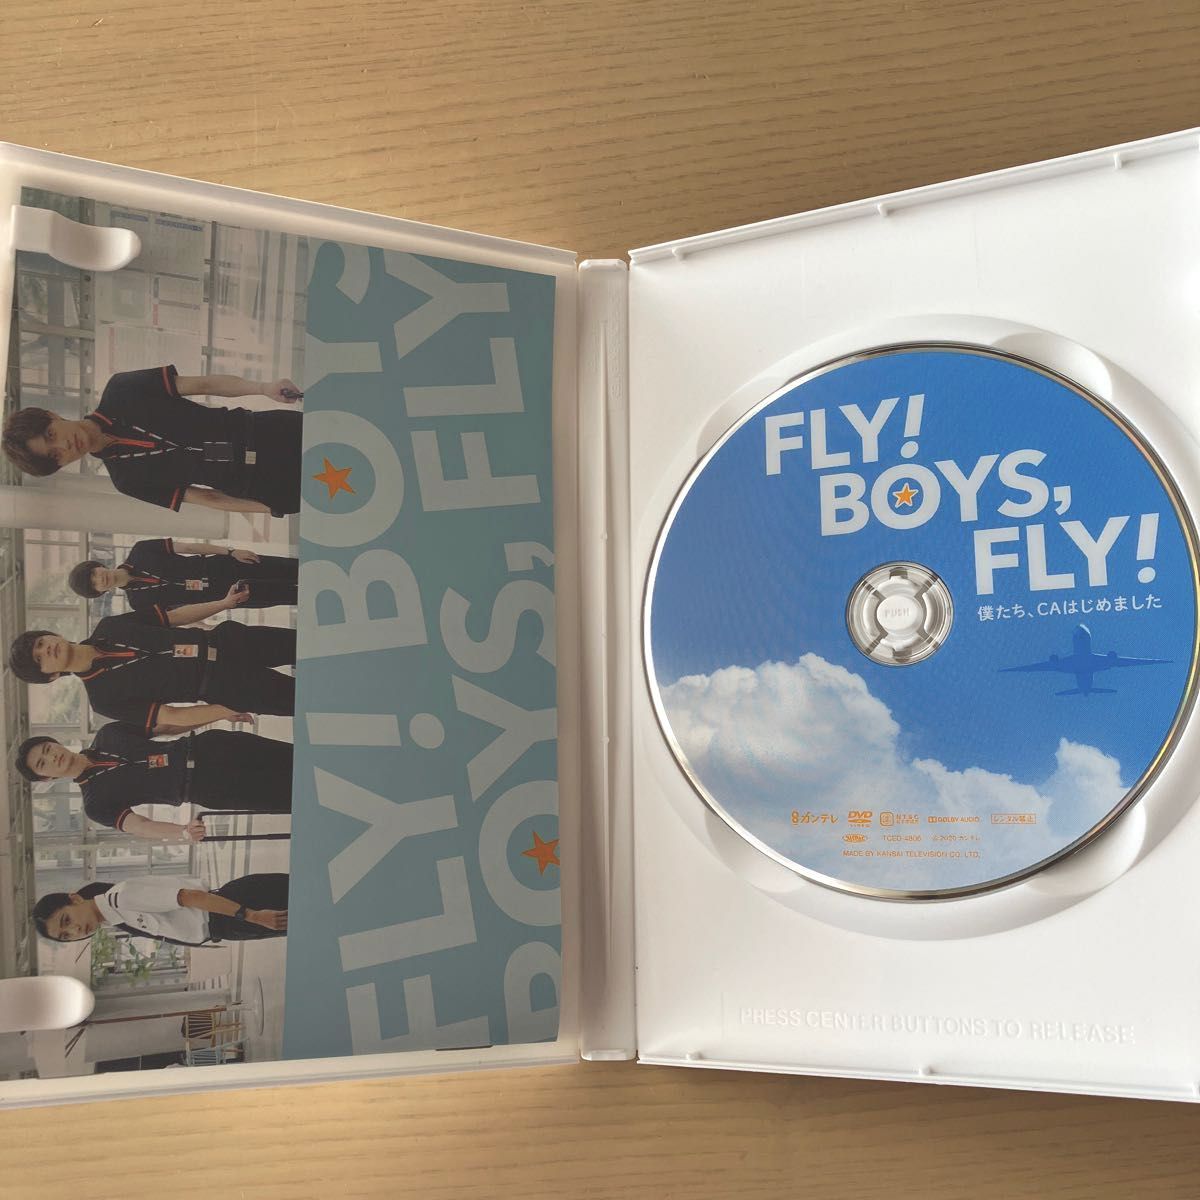 King & Prince 永瀬廉 主演ドラマ【FLY! BOYS,FLY! 僕たち、CAはじめました】DVD/特典ポストカード付